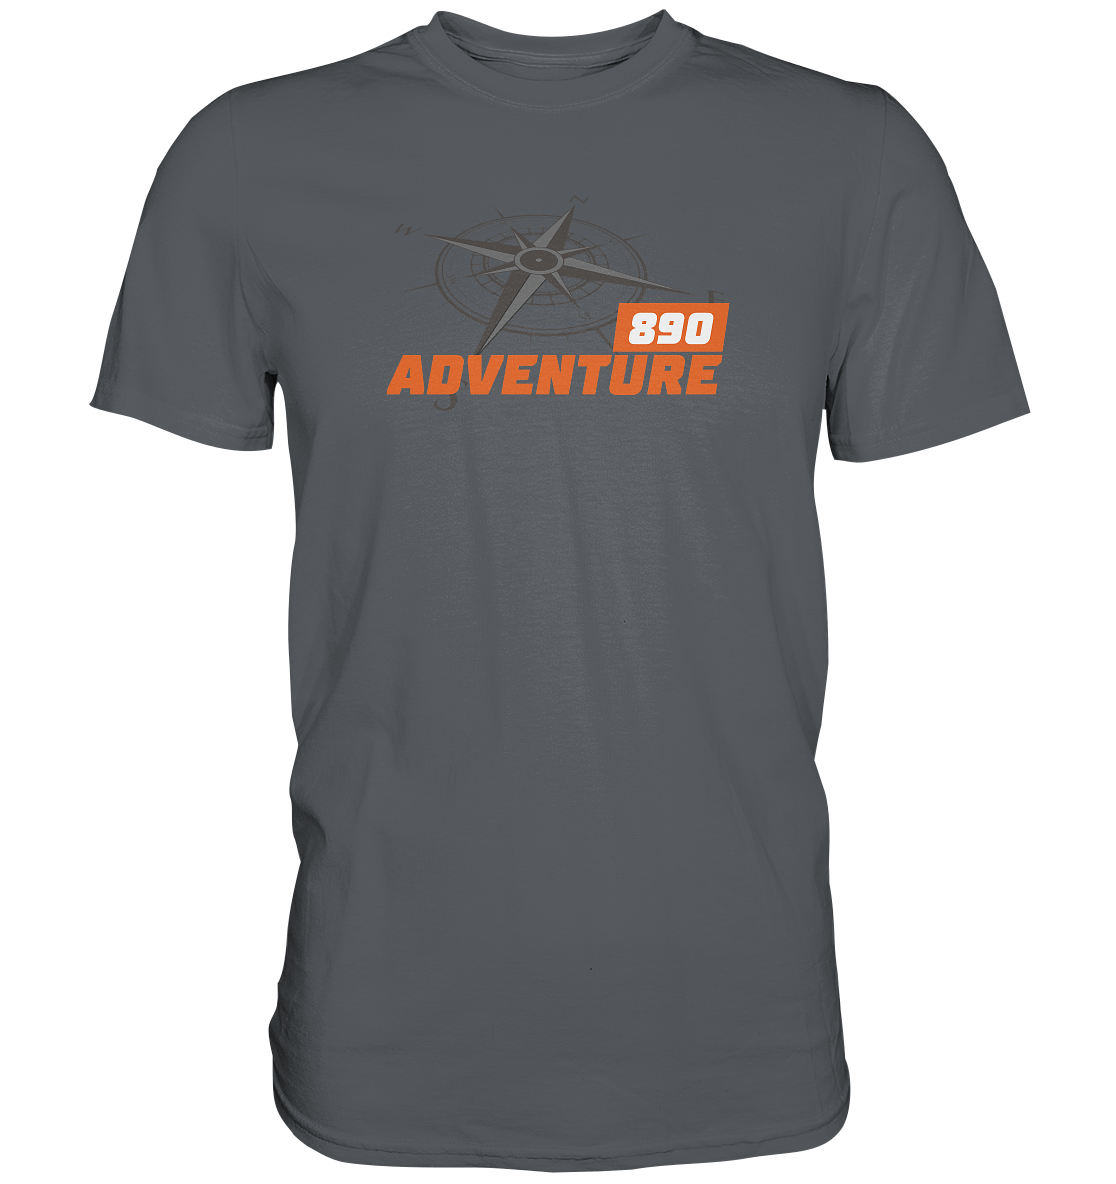 Adventure 890 Kompass - Premium unisex Shirt